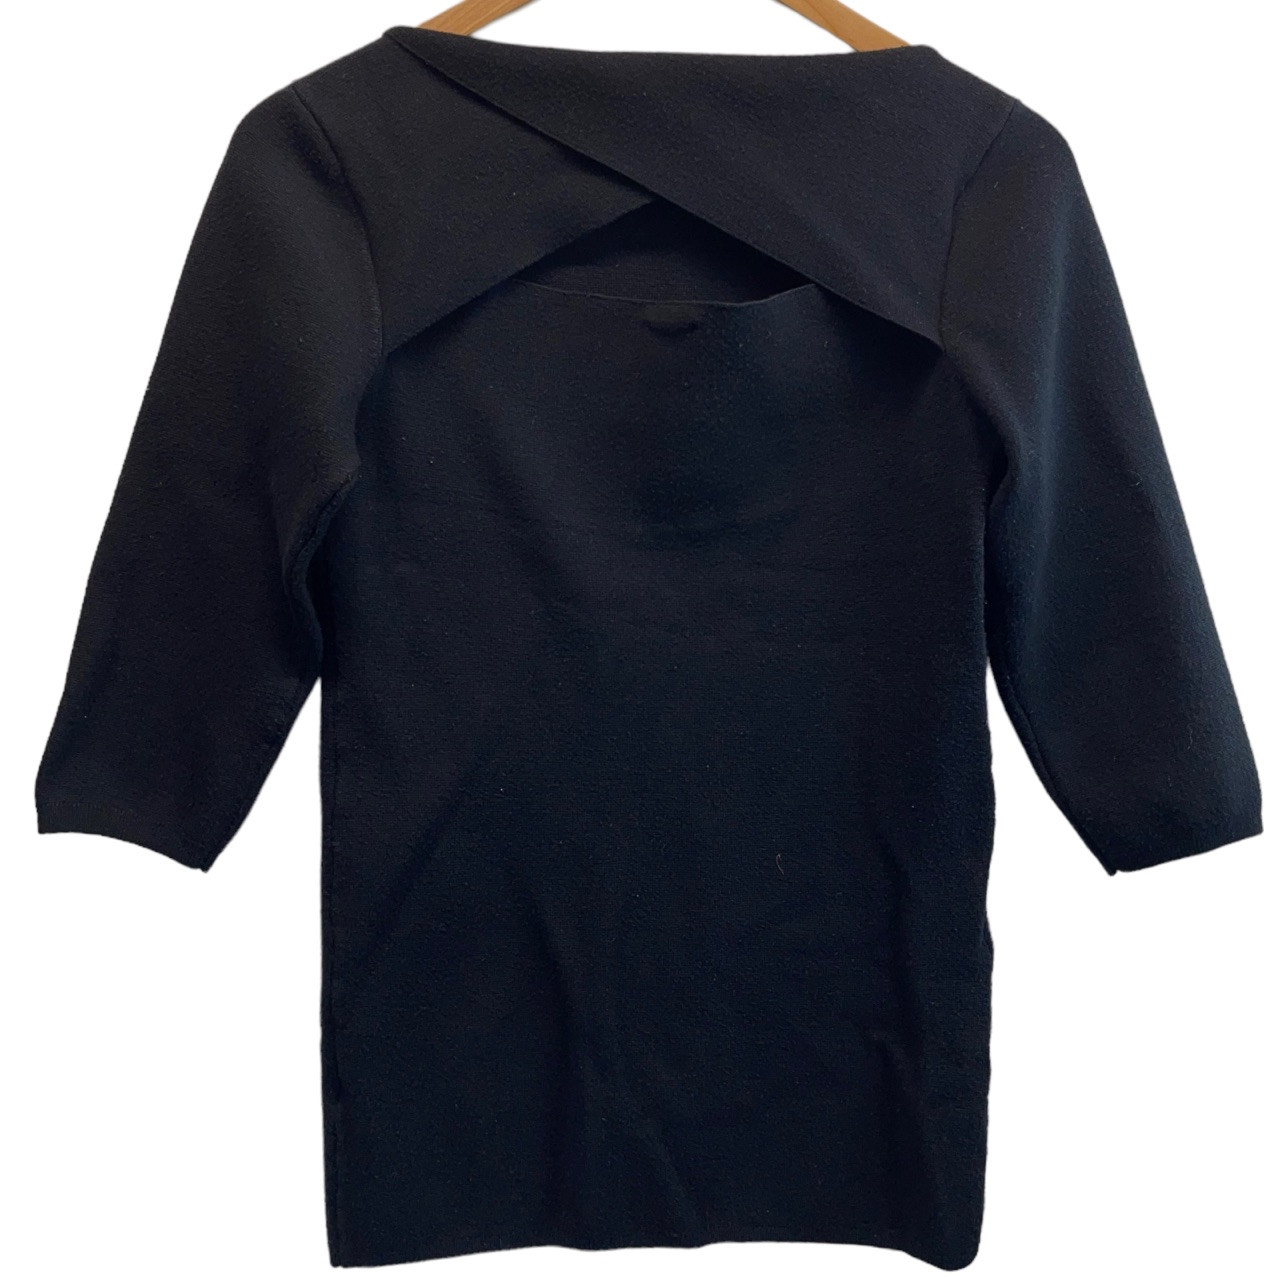 Custom 3/4 Sleeve Shirts - Create, Buy & Sell